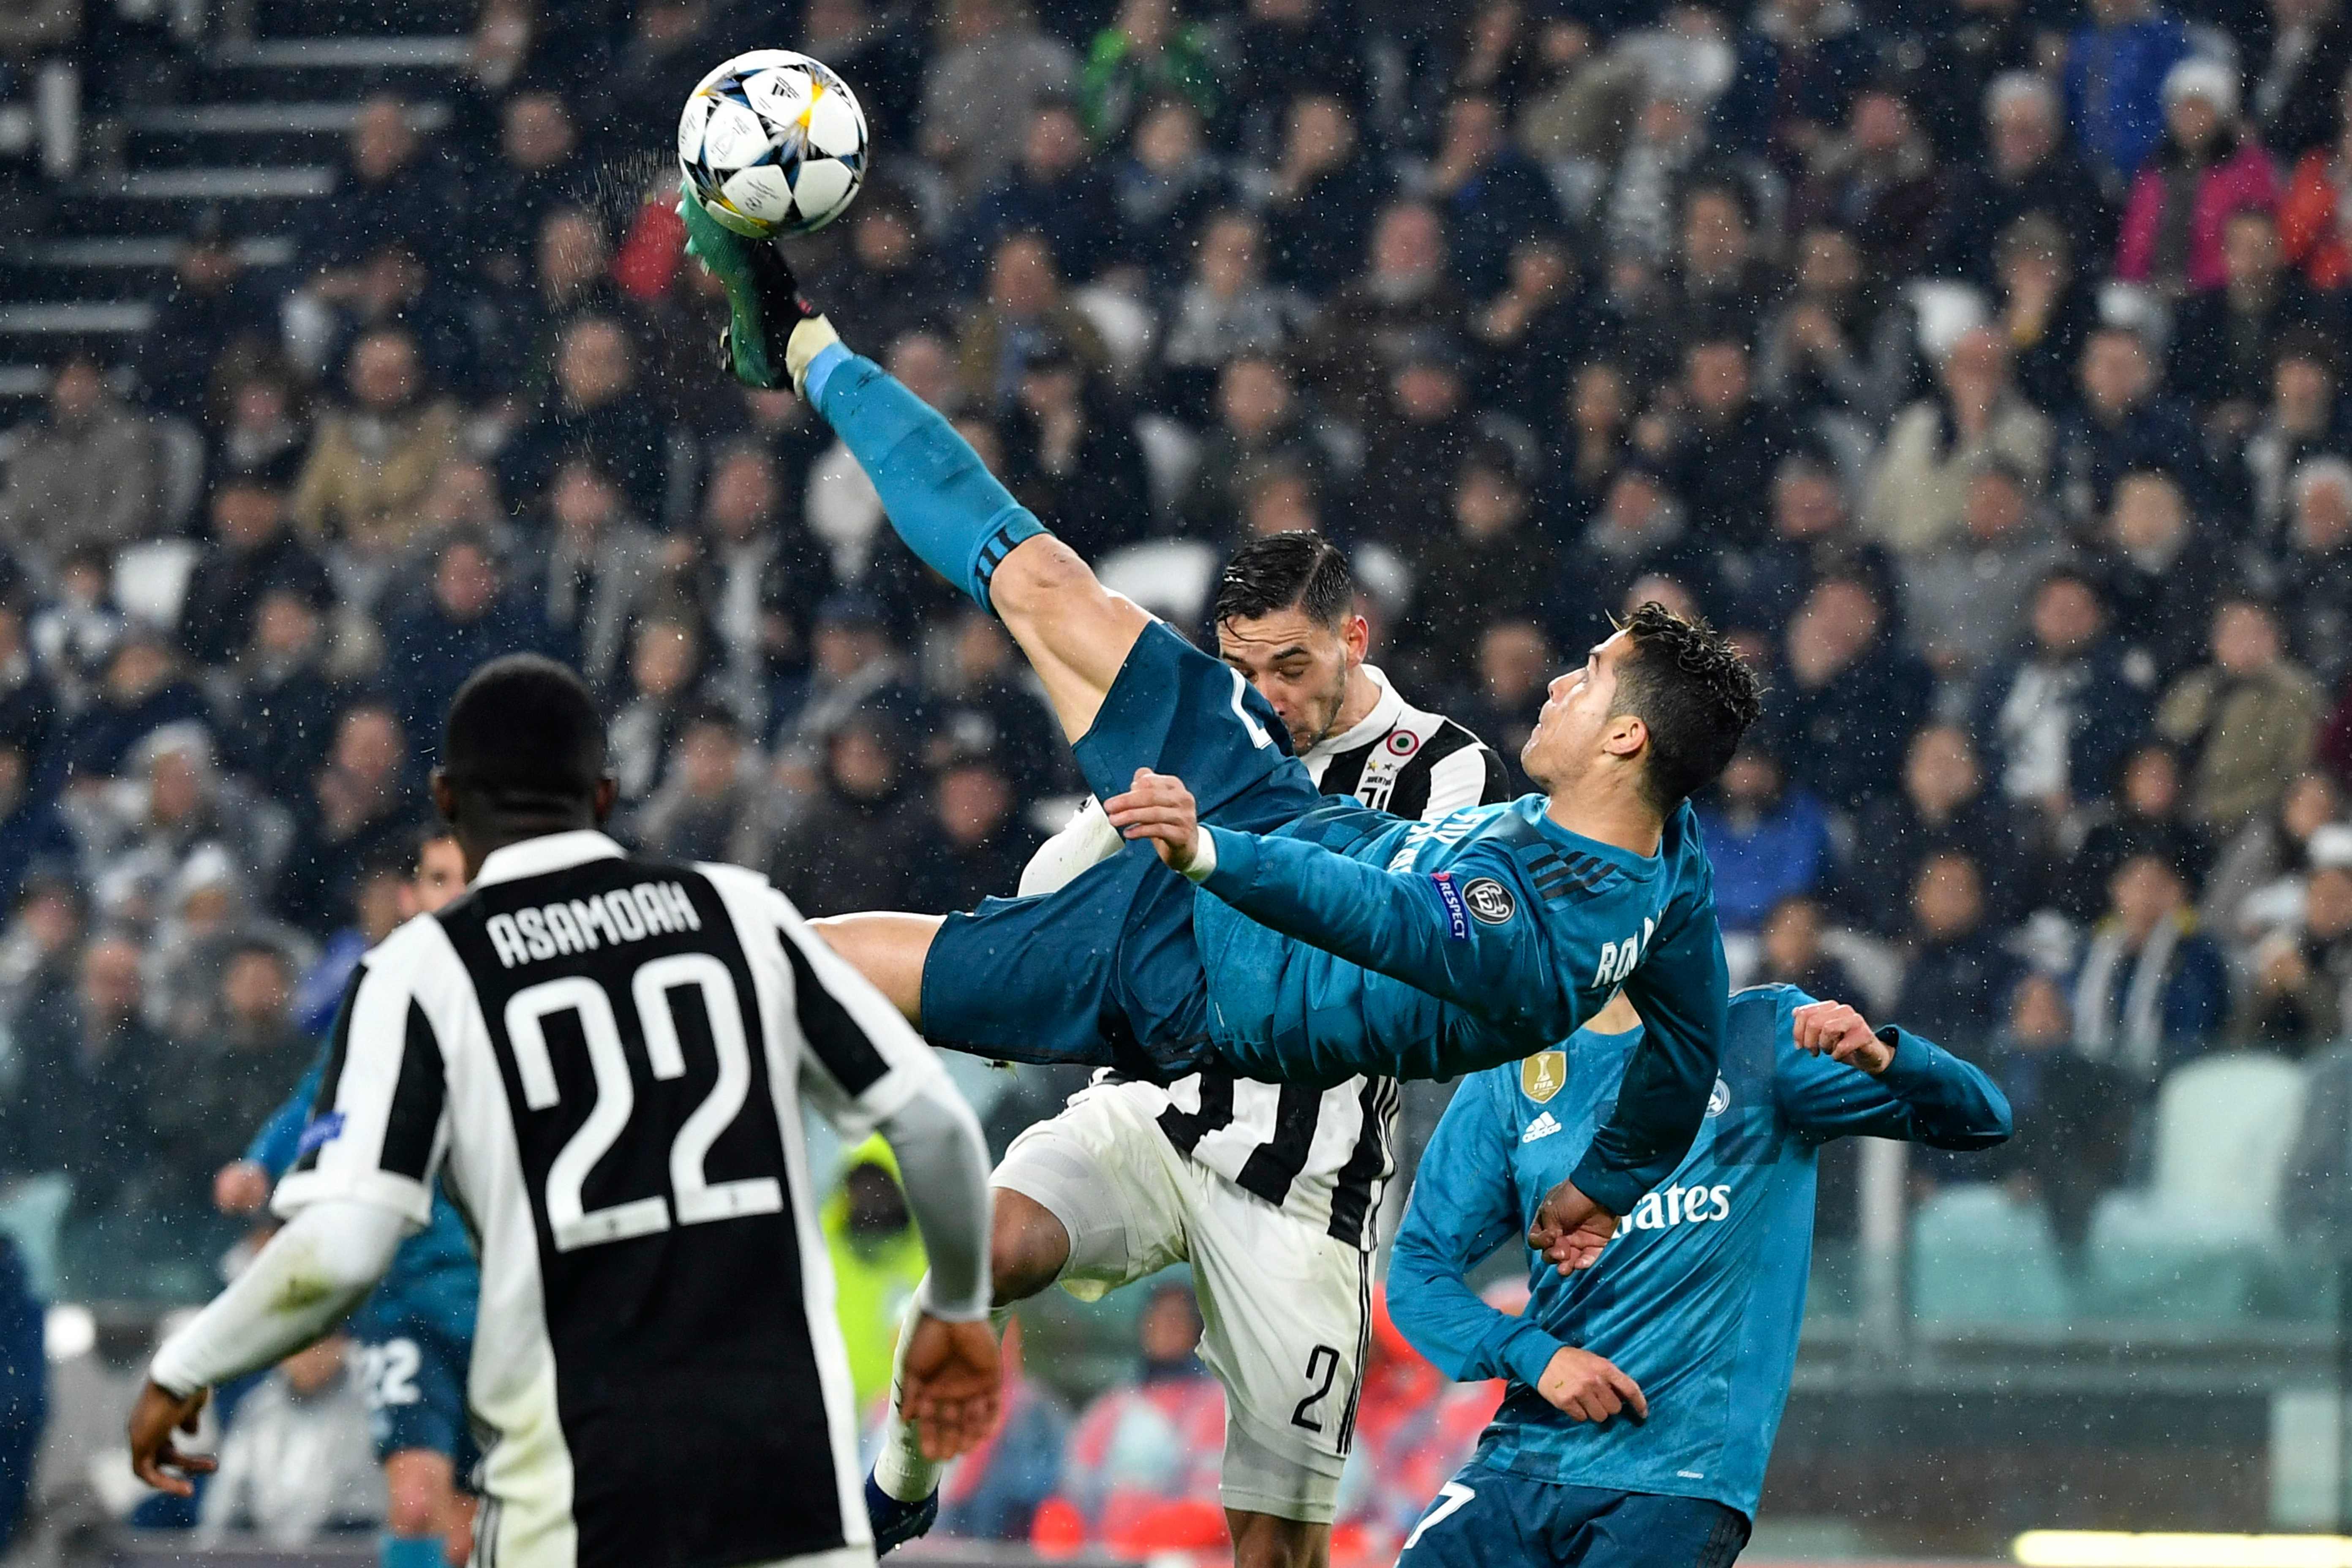 7 incredible photos of Cristiano Ronaldos stunning bicycle kick goal